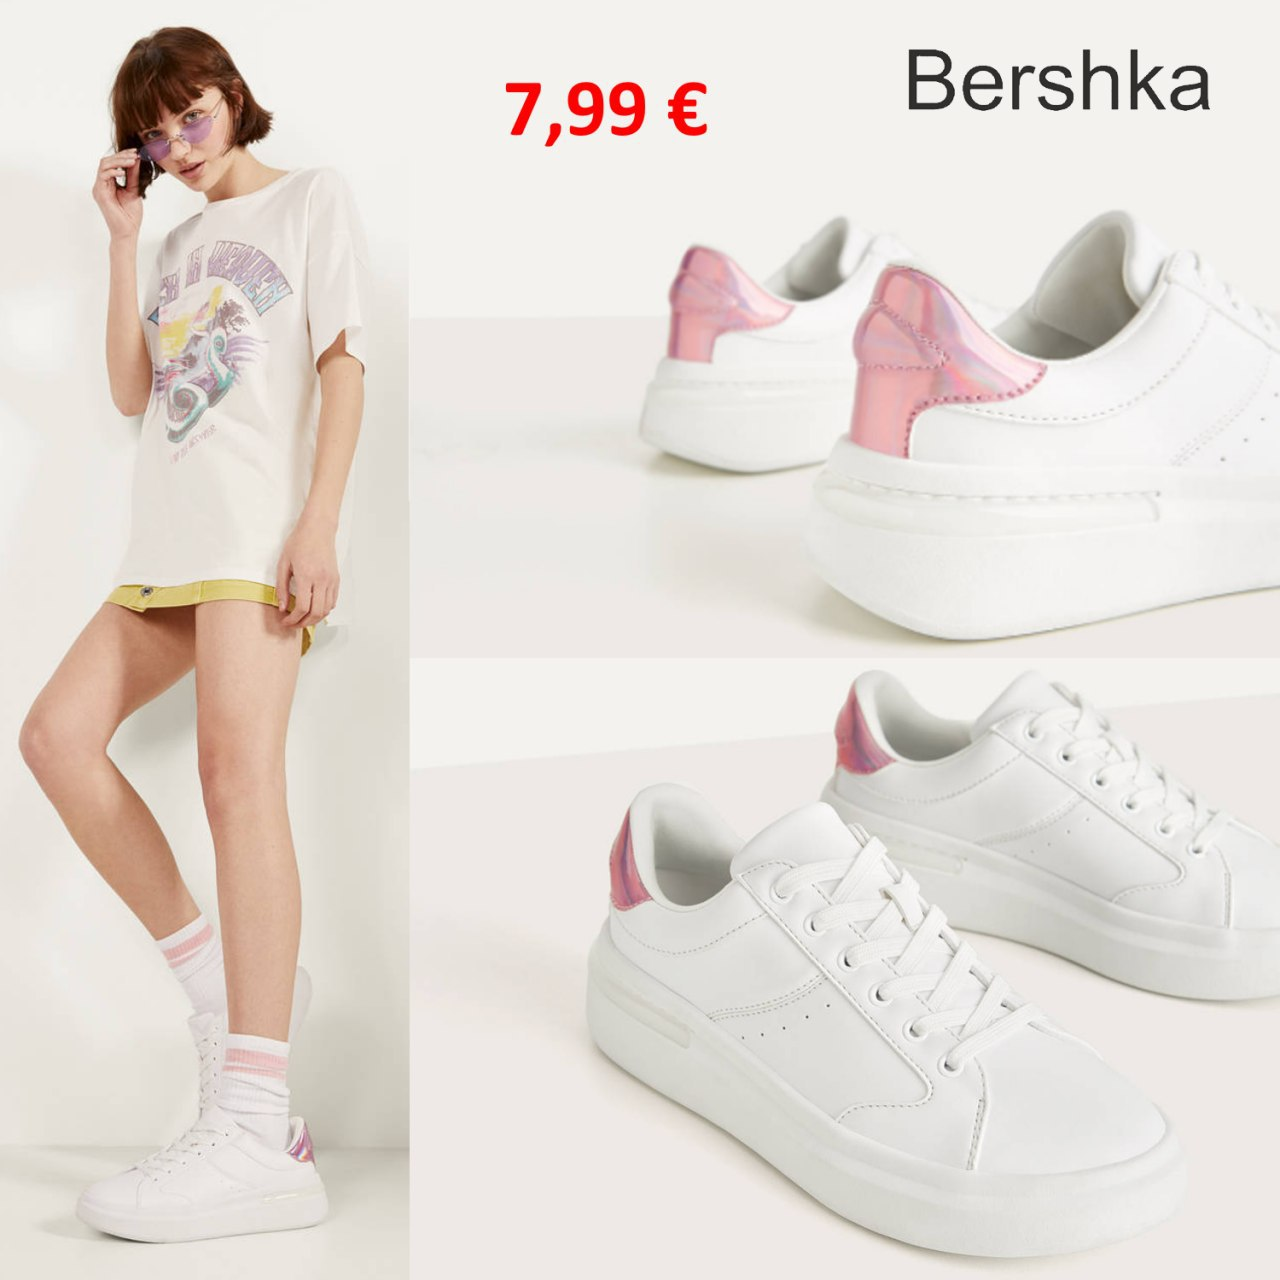 80/2161985/image.jpg" width="550" alt="Обувь Bershka Ин...